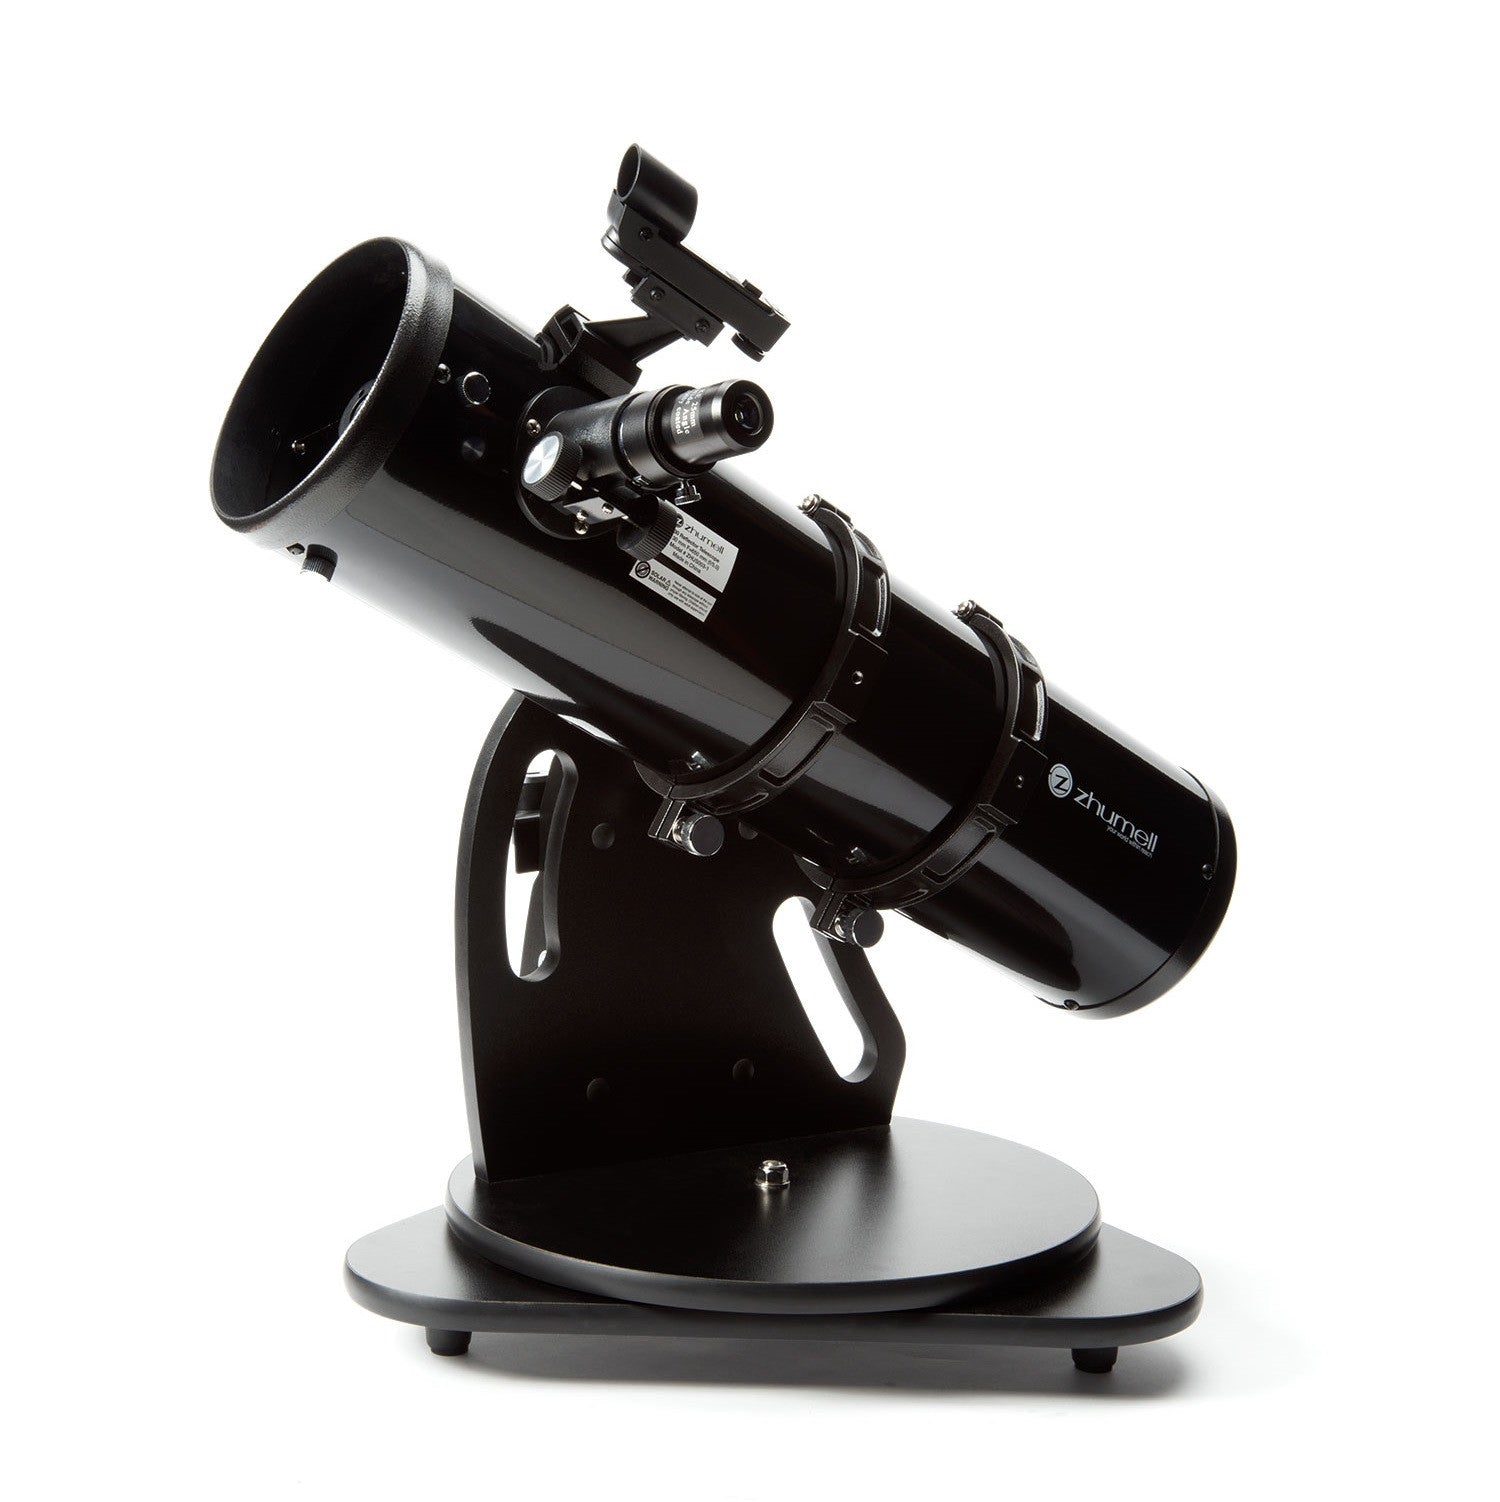 Zhumell Z130 Portable Altazimuth Reflector Telescope - Telescopes at